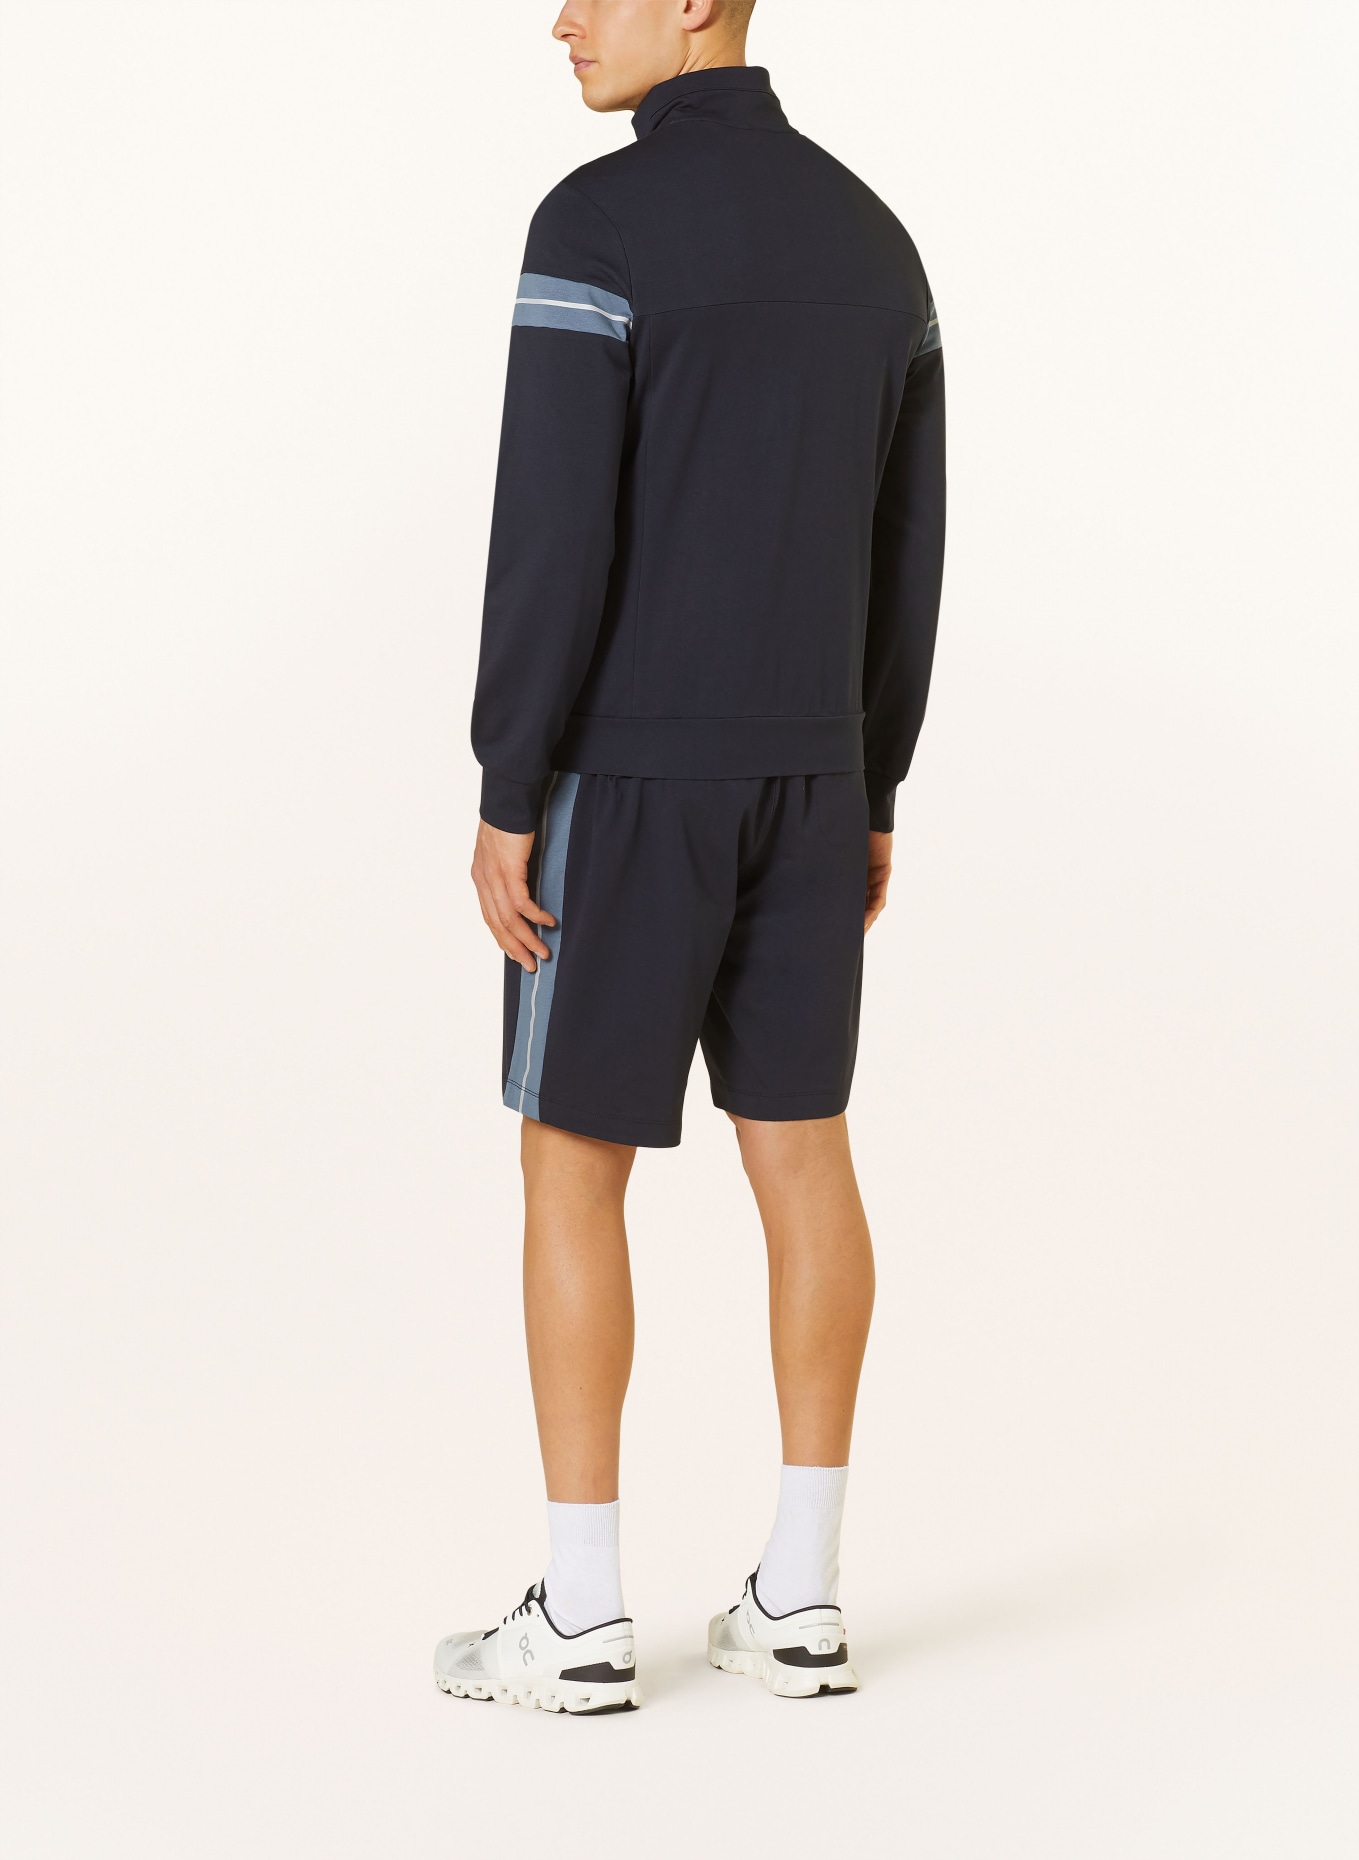 JOY sportswear Jerseyjacke BENJAMIN, Farbe: DUNKELBLAU/ BLAU (Bild 3)